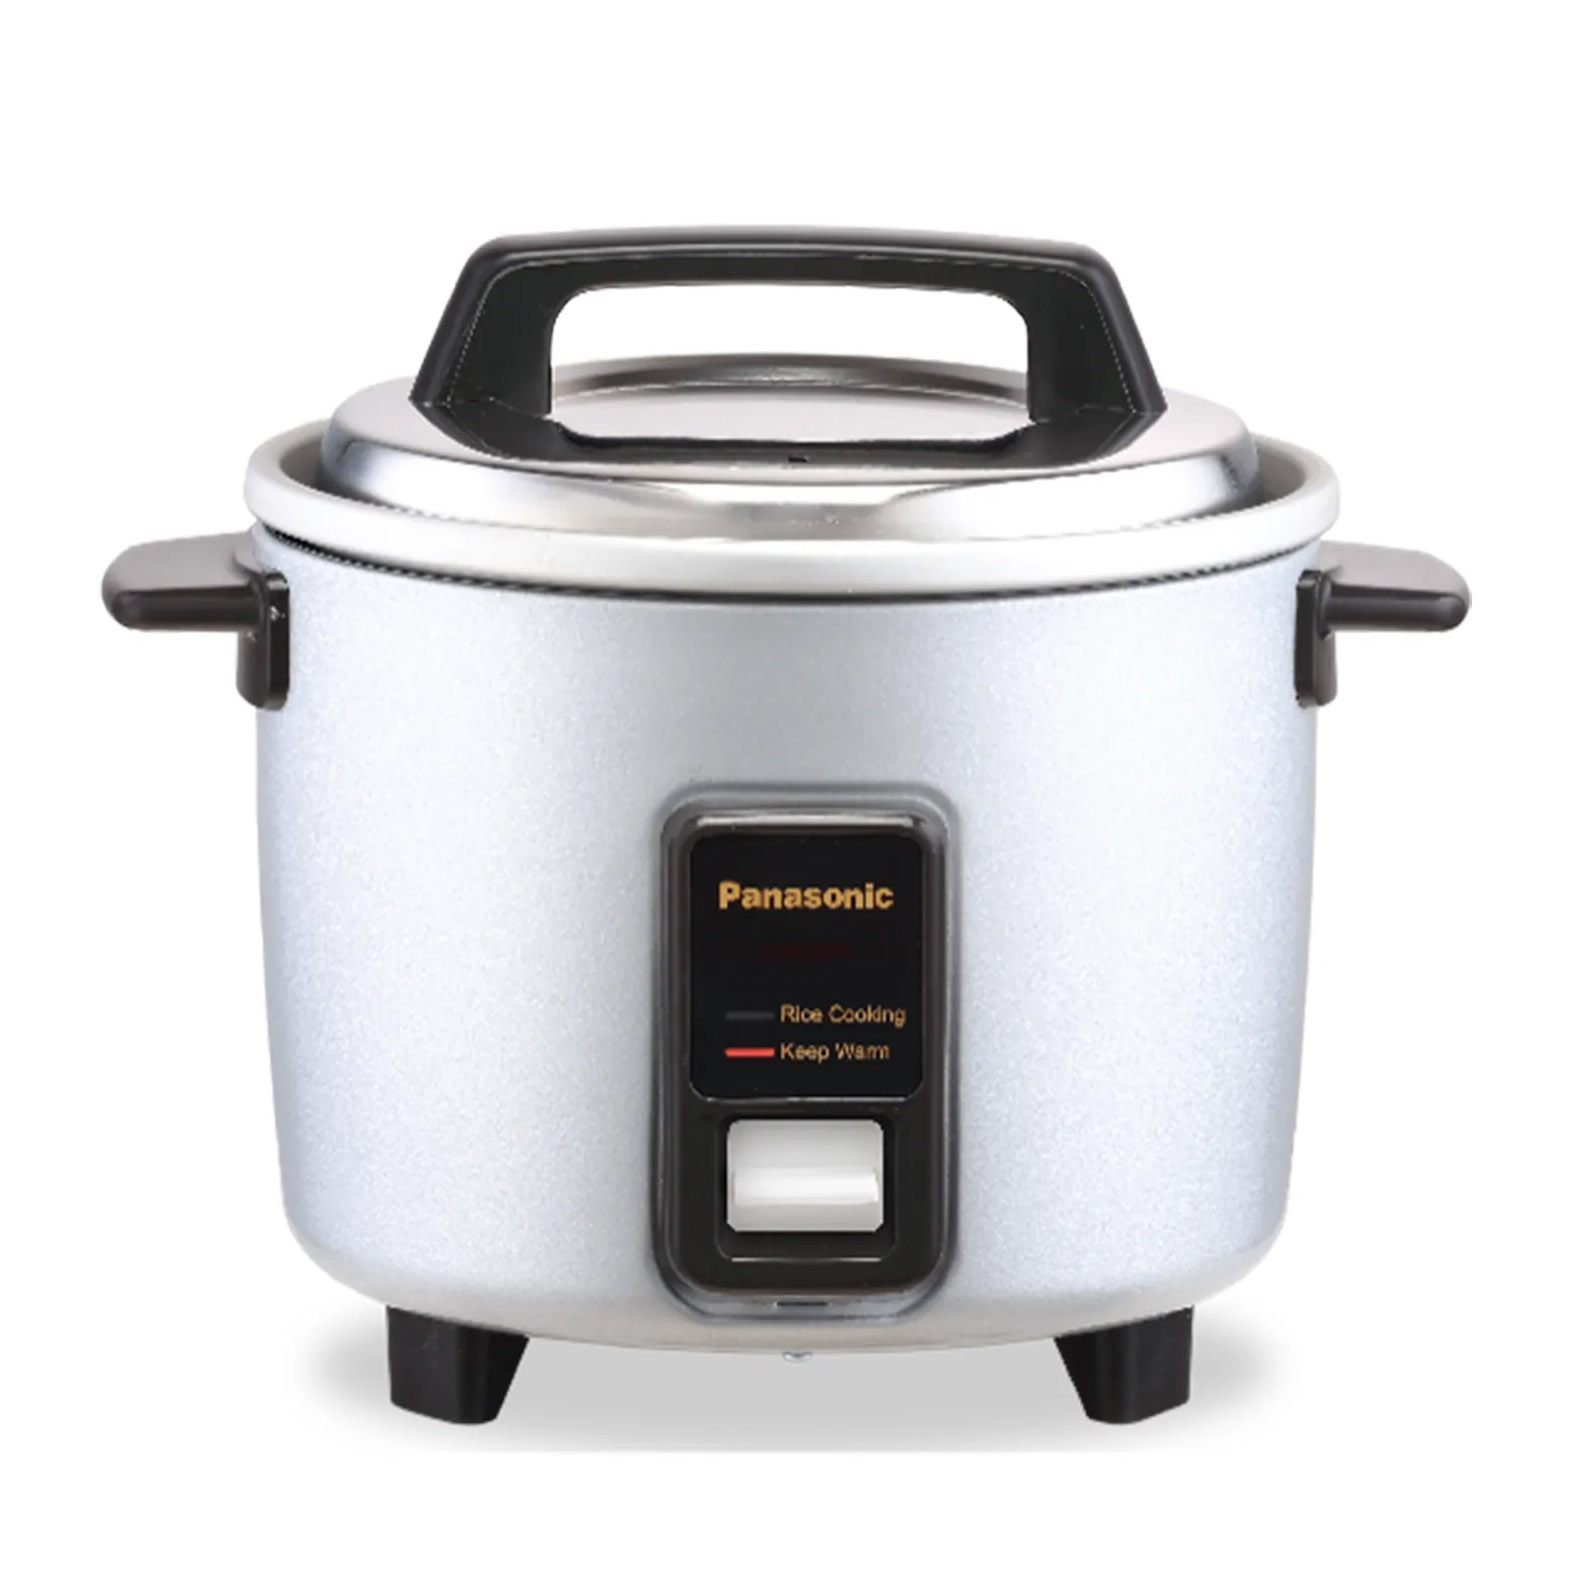 Panasonic Rice Cooker SR-Y10 (Silver)